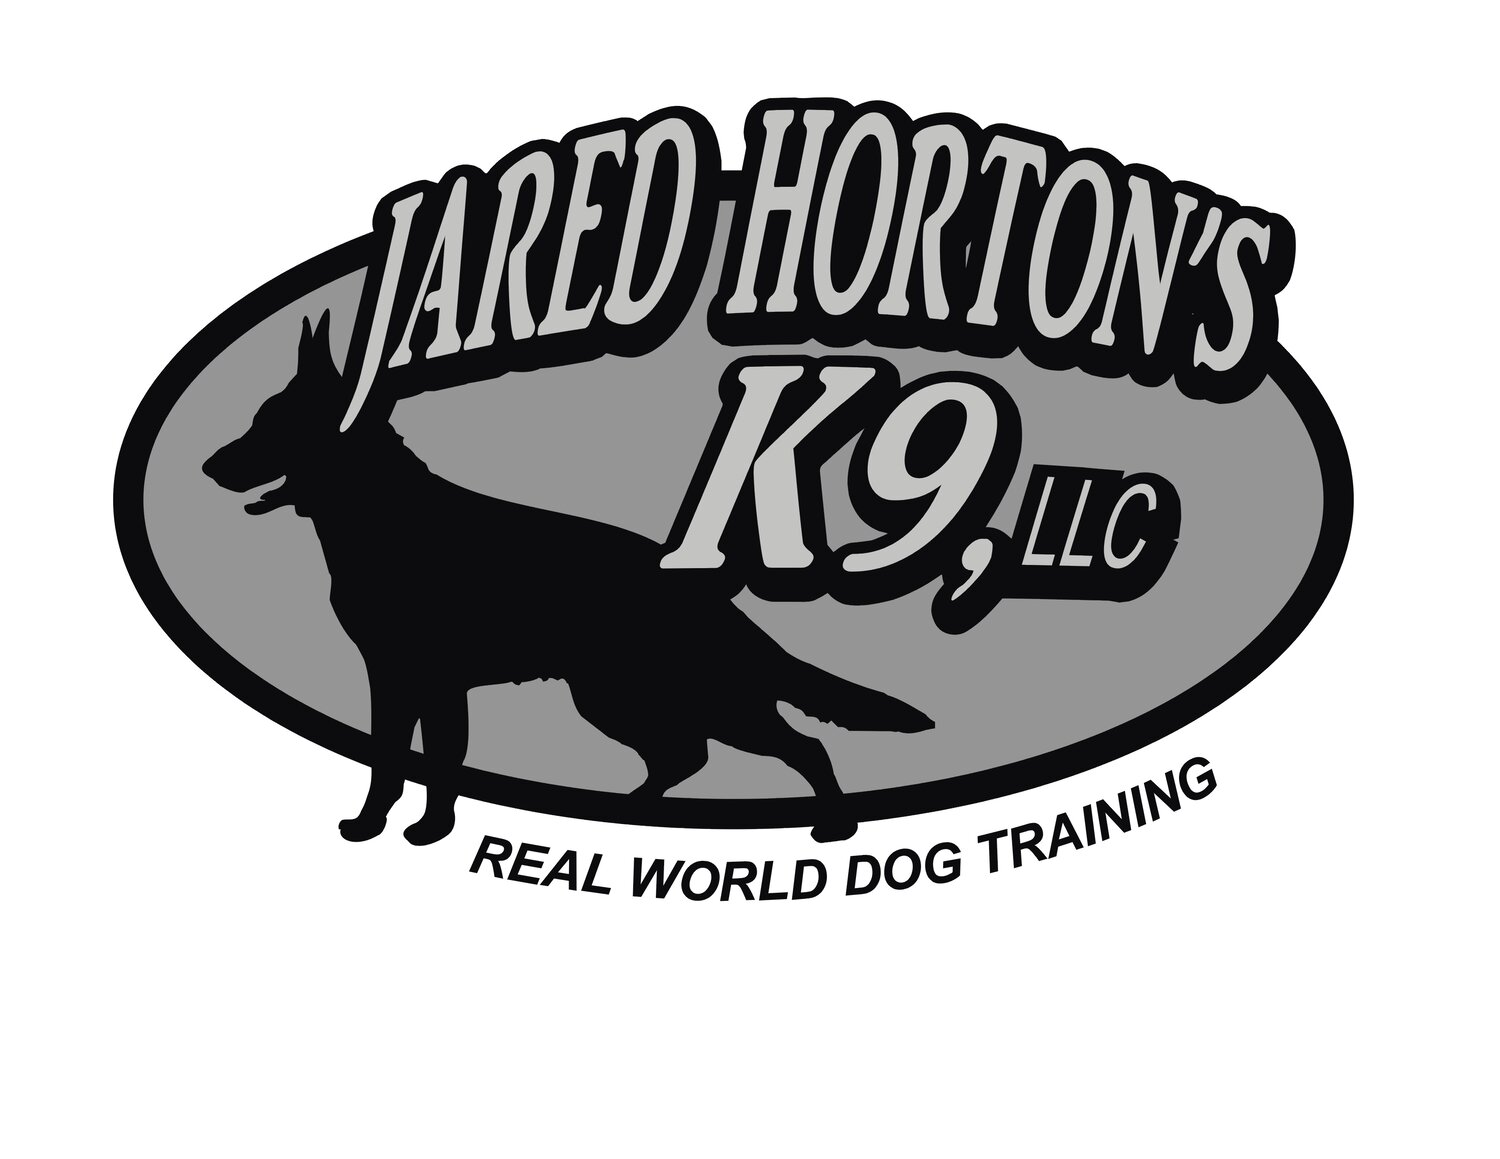 Jared Horton's K9 LLC 